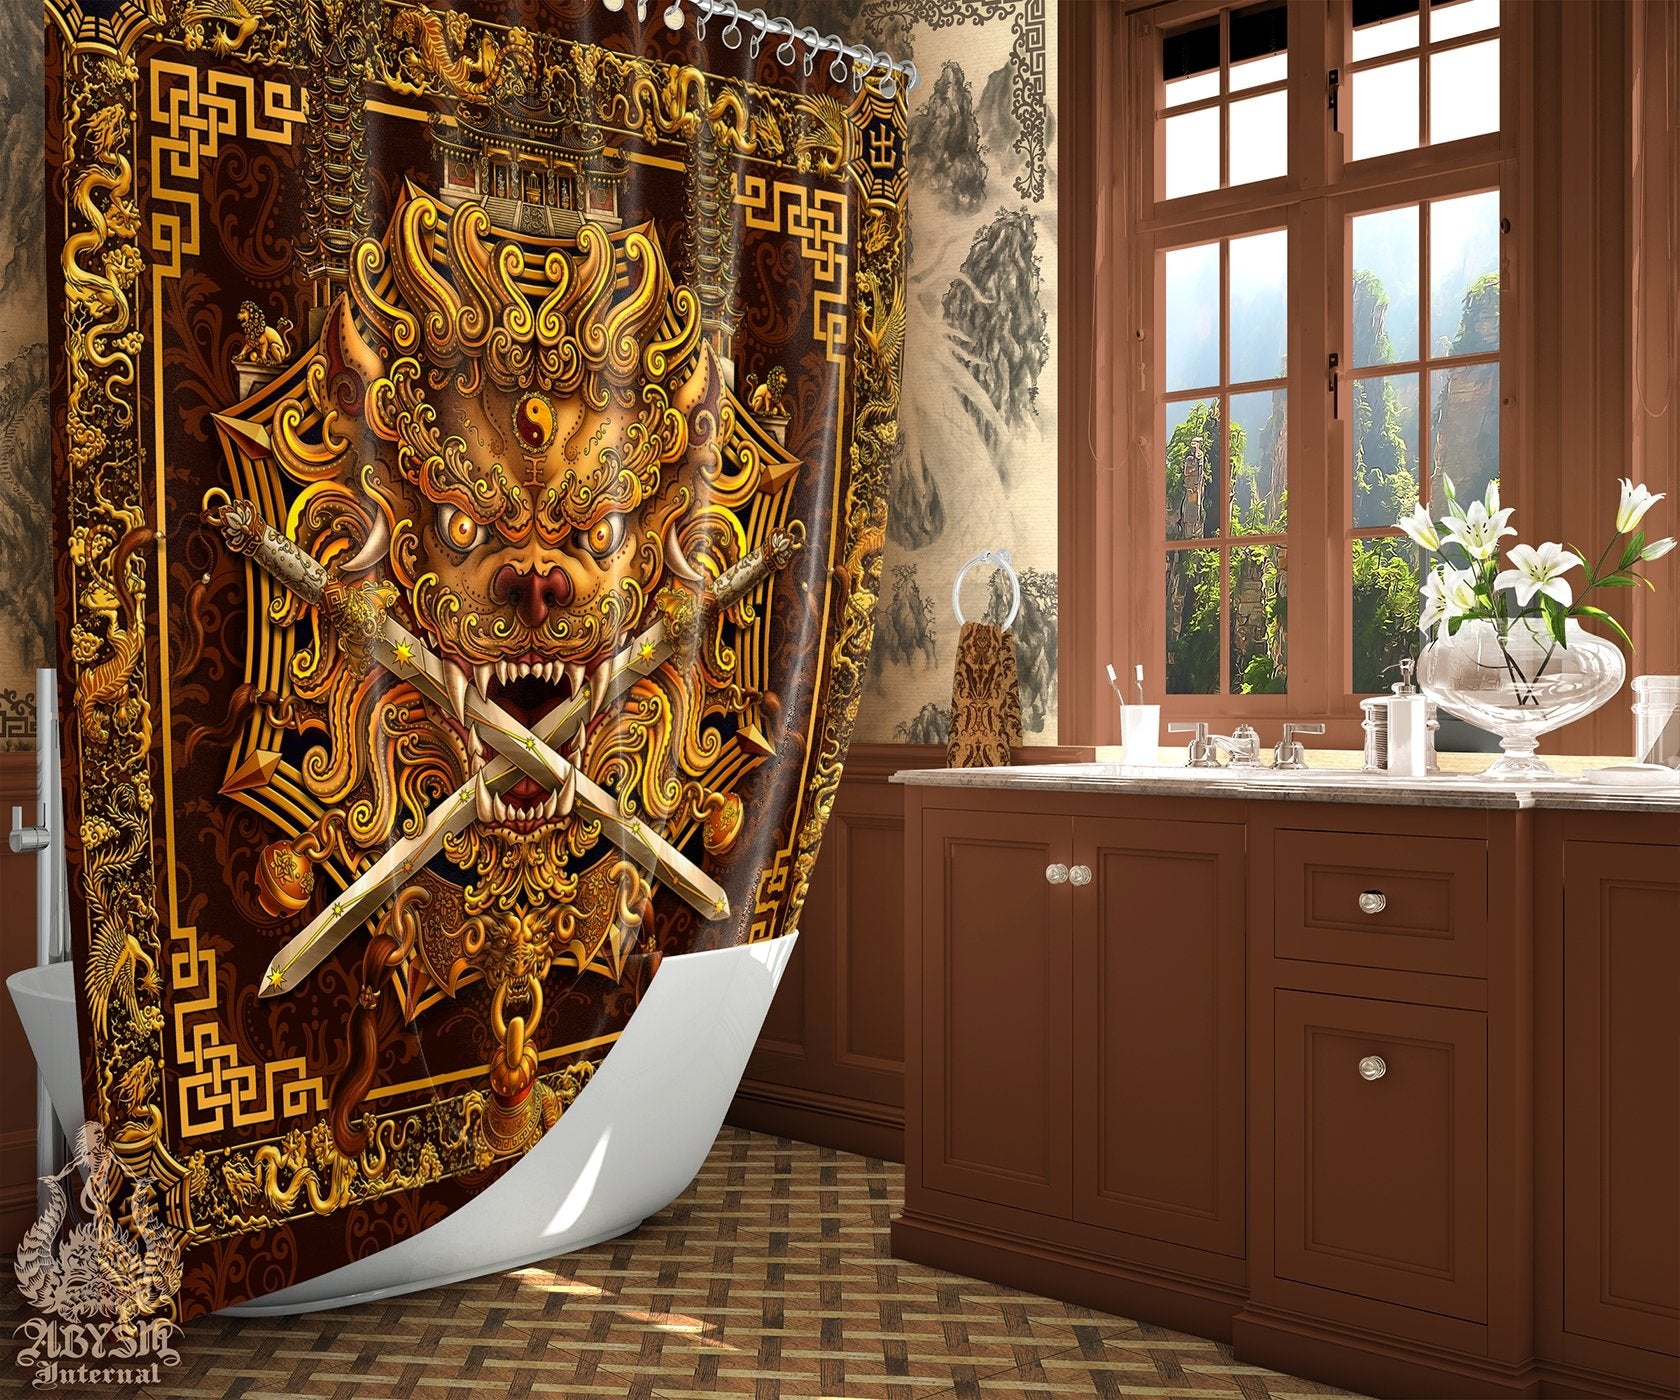 Lion Shower Curtain, Taiwan Sword Lion, Chinese Bathroom, Alternative Fantasy Decor, Asian Mythology - Gold - Abysm Internal